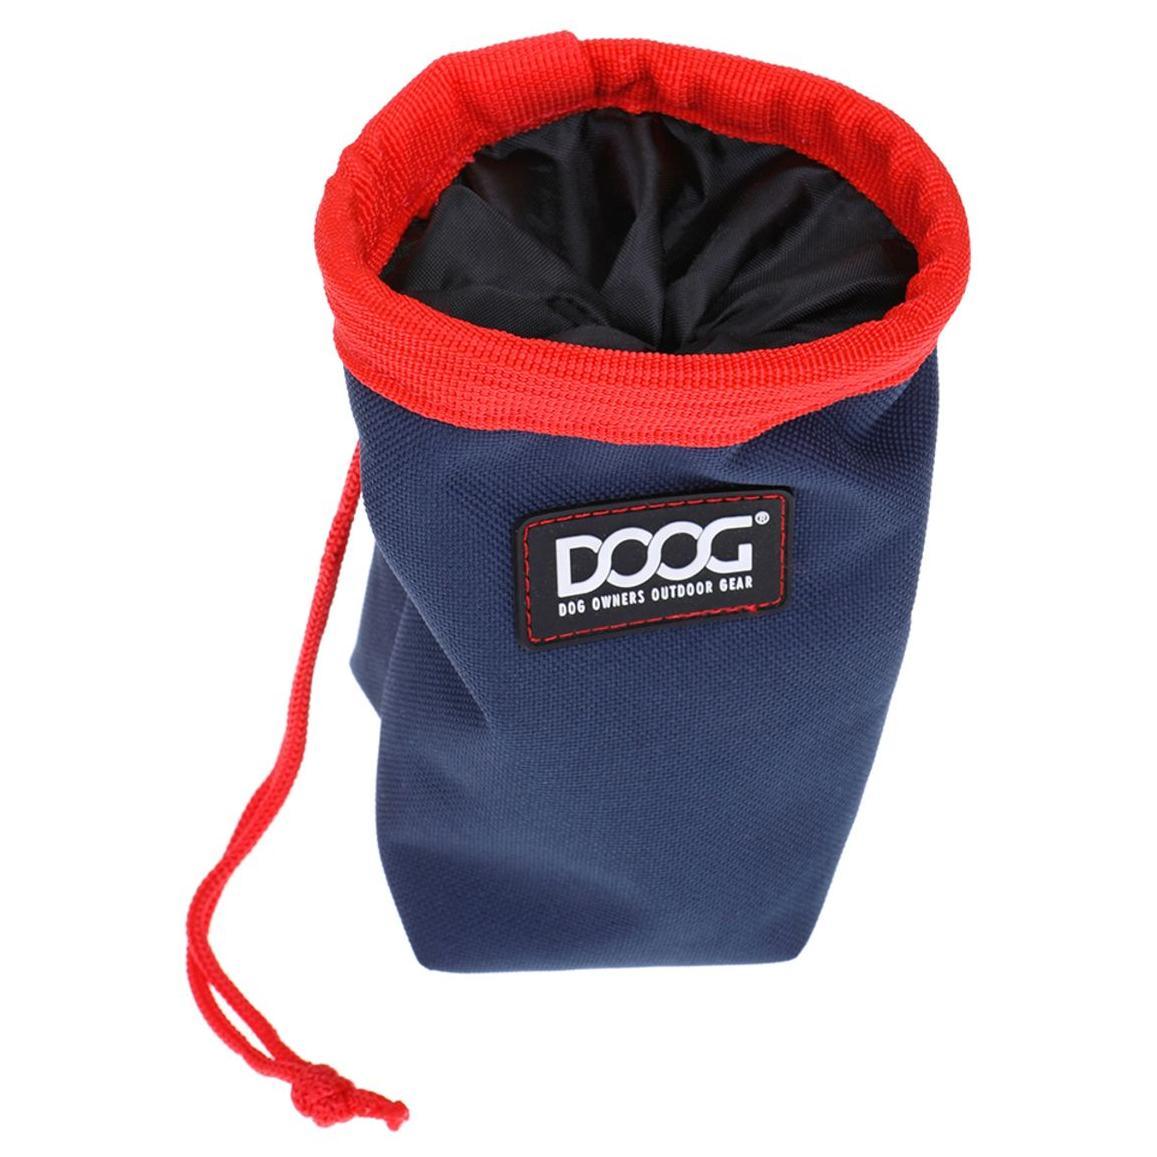 DOOG Treat & Training Pouch